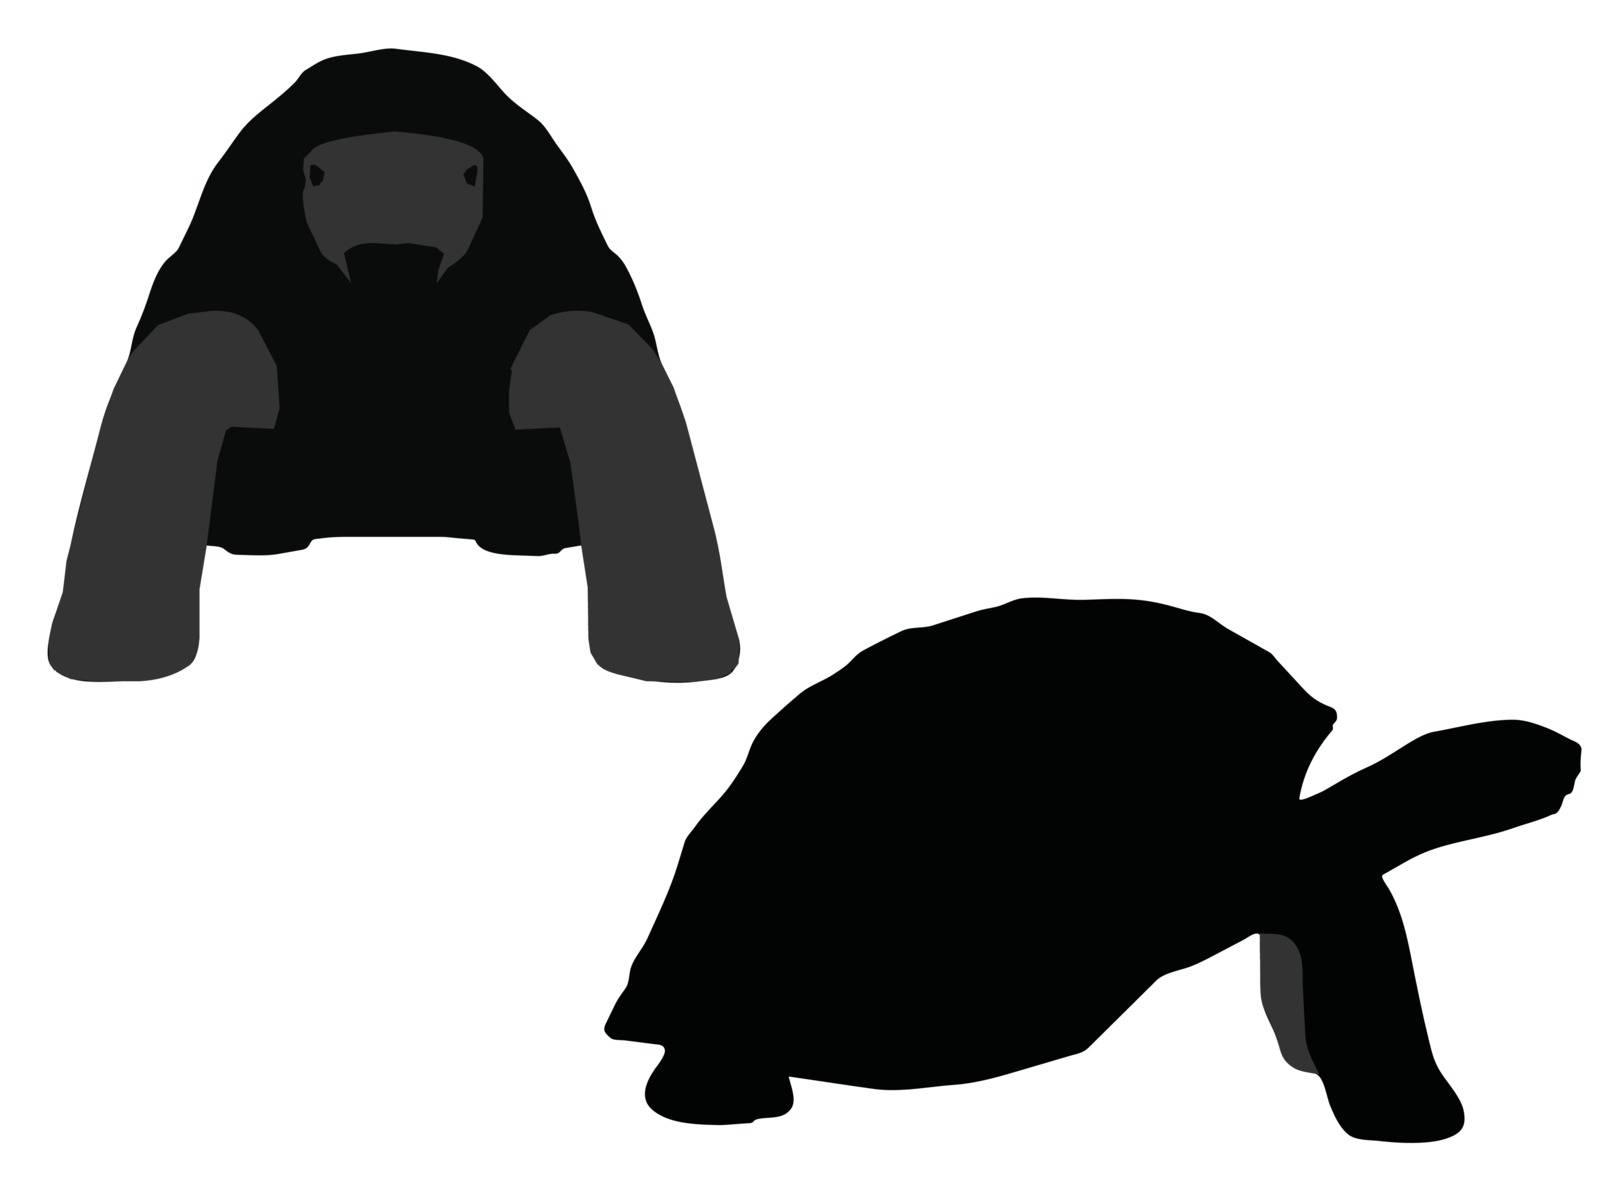 EPS 10 vector illustration of turtle, tortoise silhouette